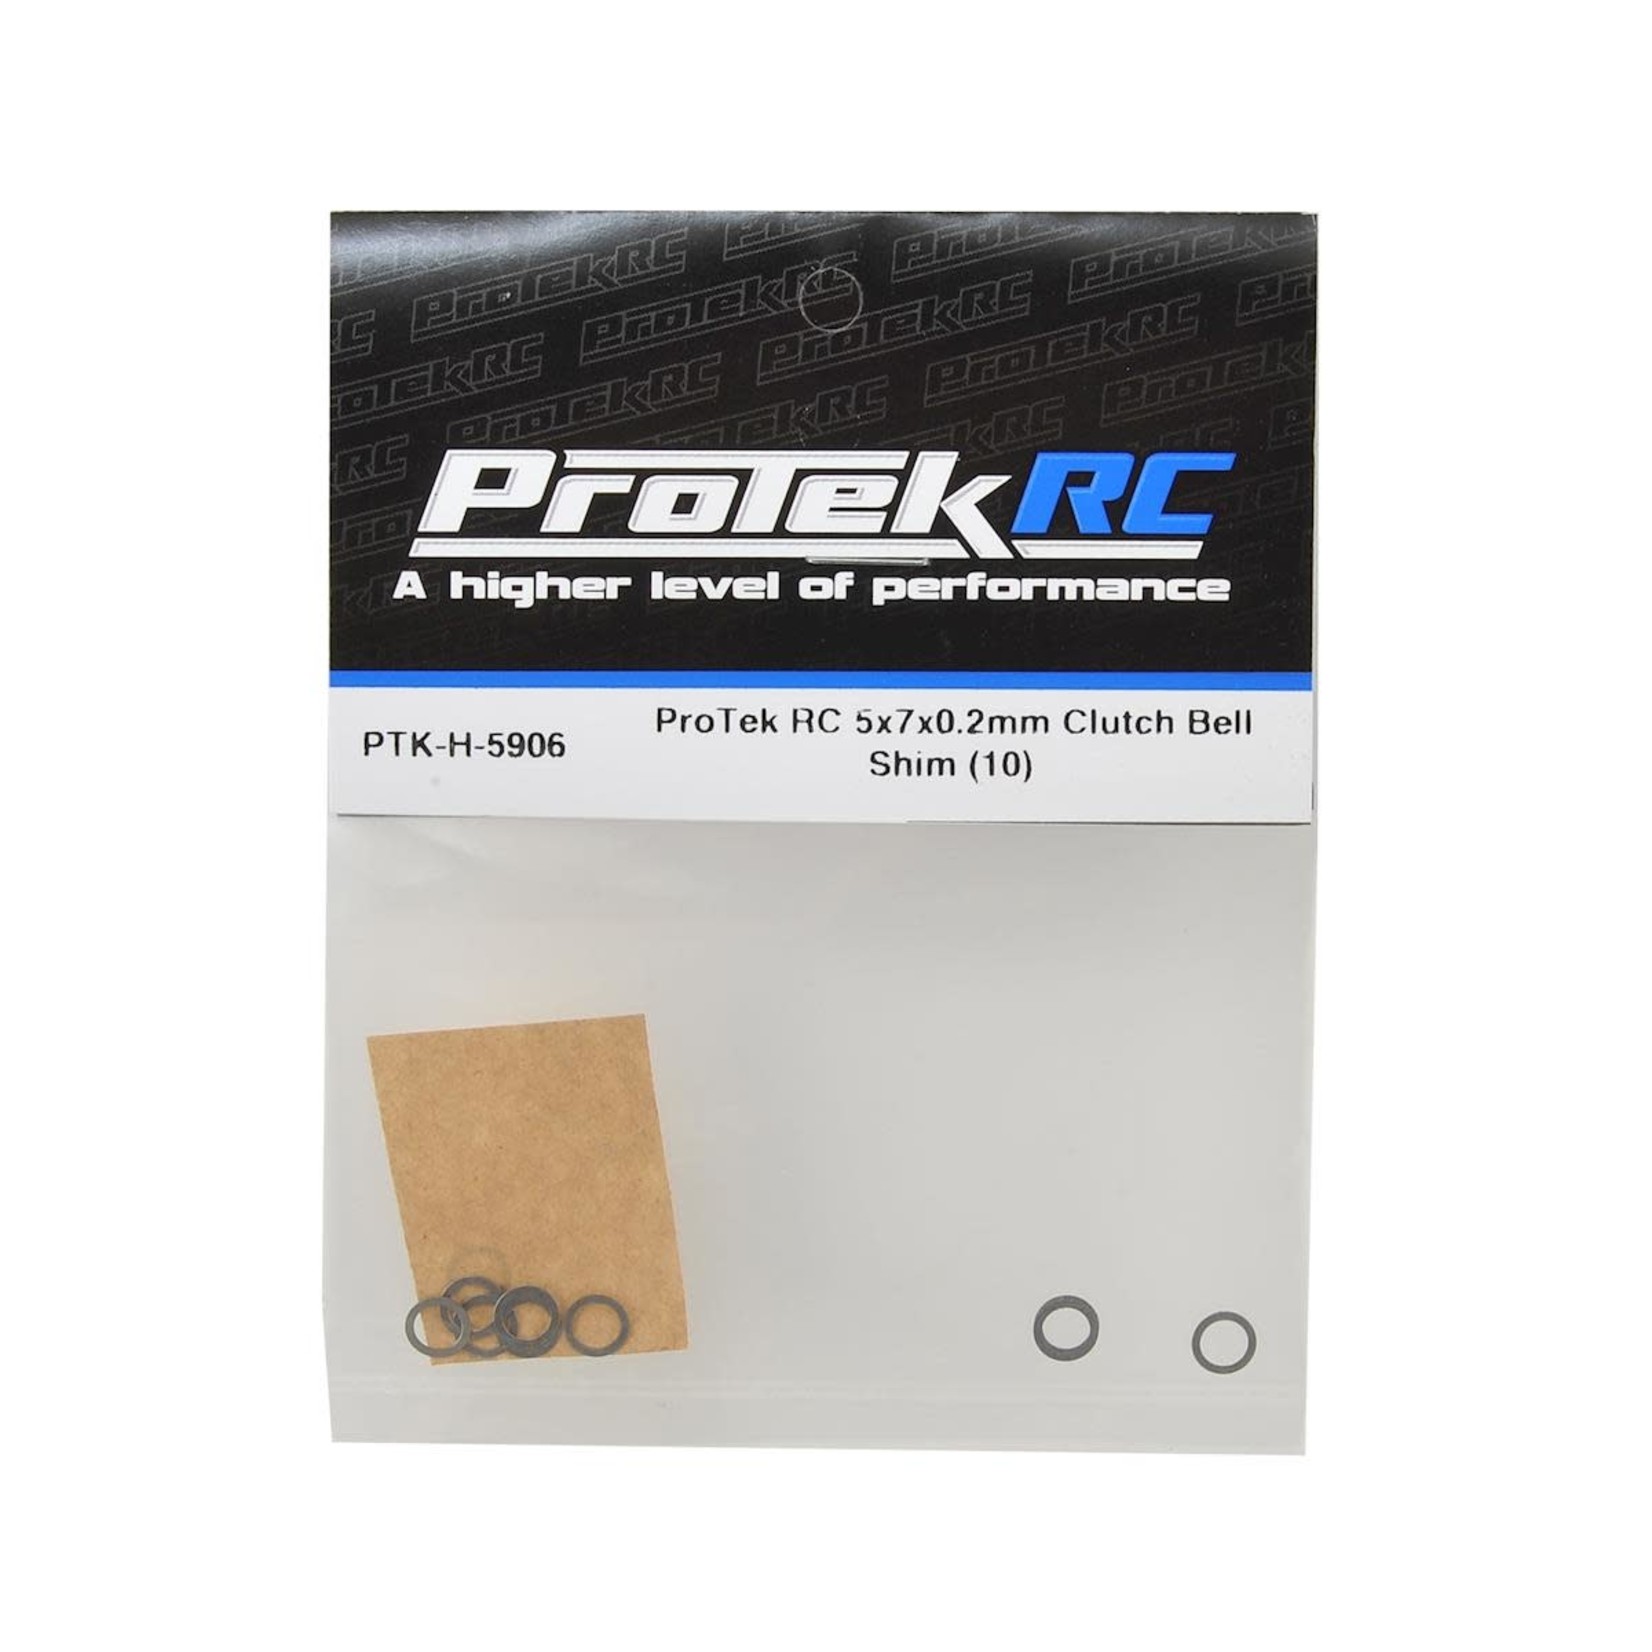 ProTek RC ProTek RC 5x7x0.2mm Clutch Bell Shim (10) ptk-h-5906